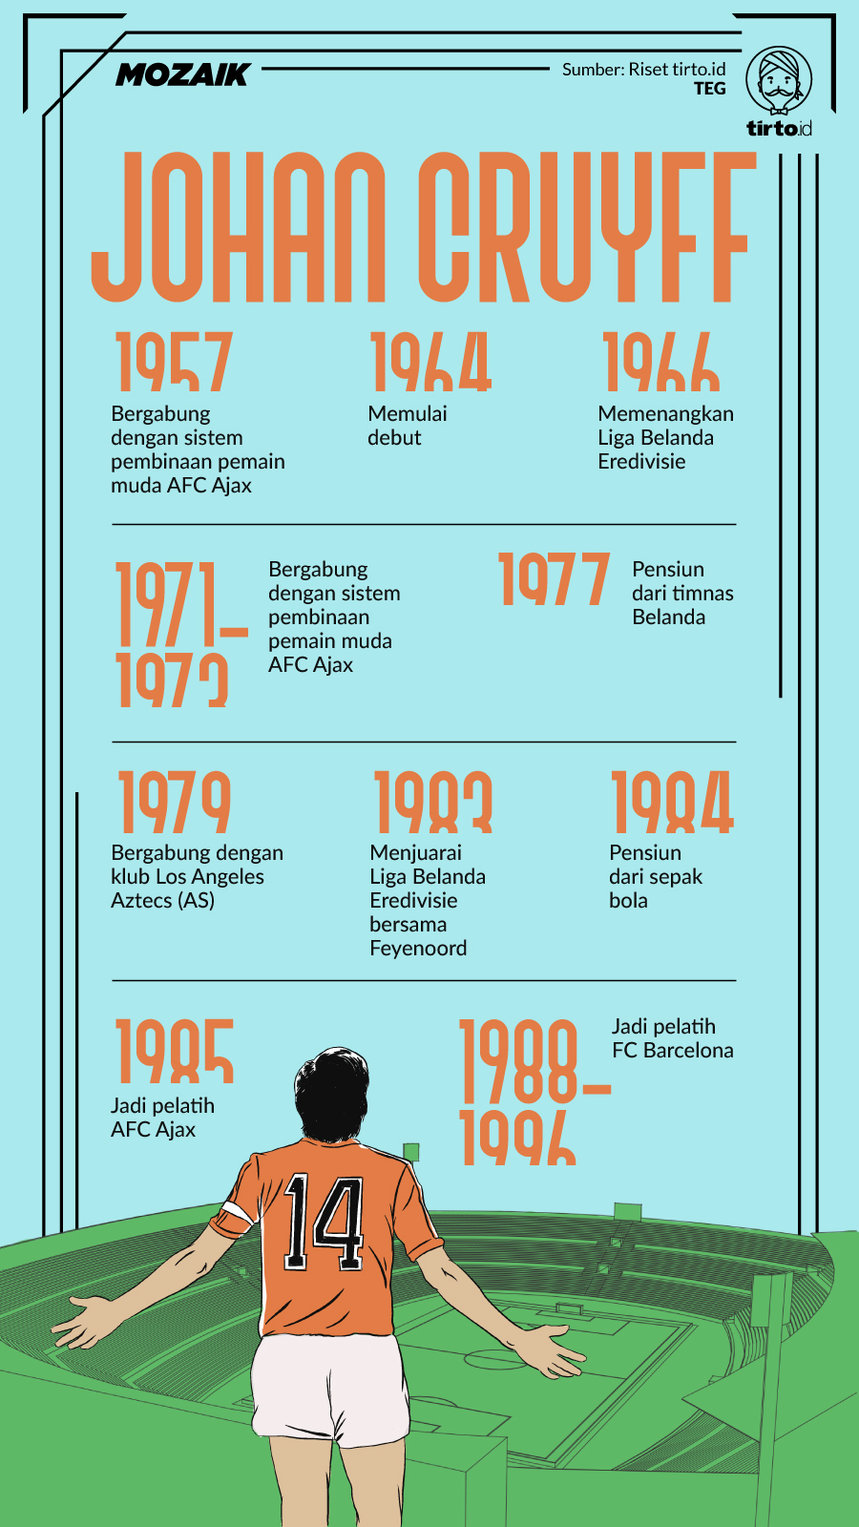 Infografik Mozaik Johan Cruyff